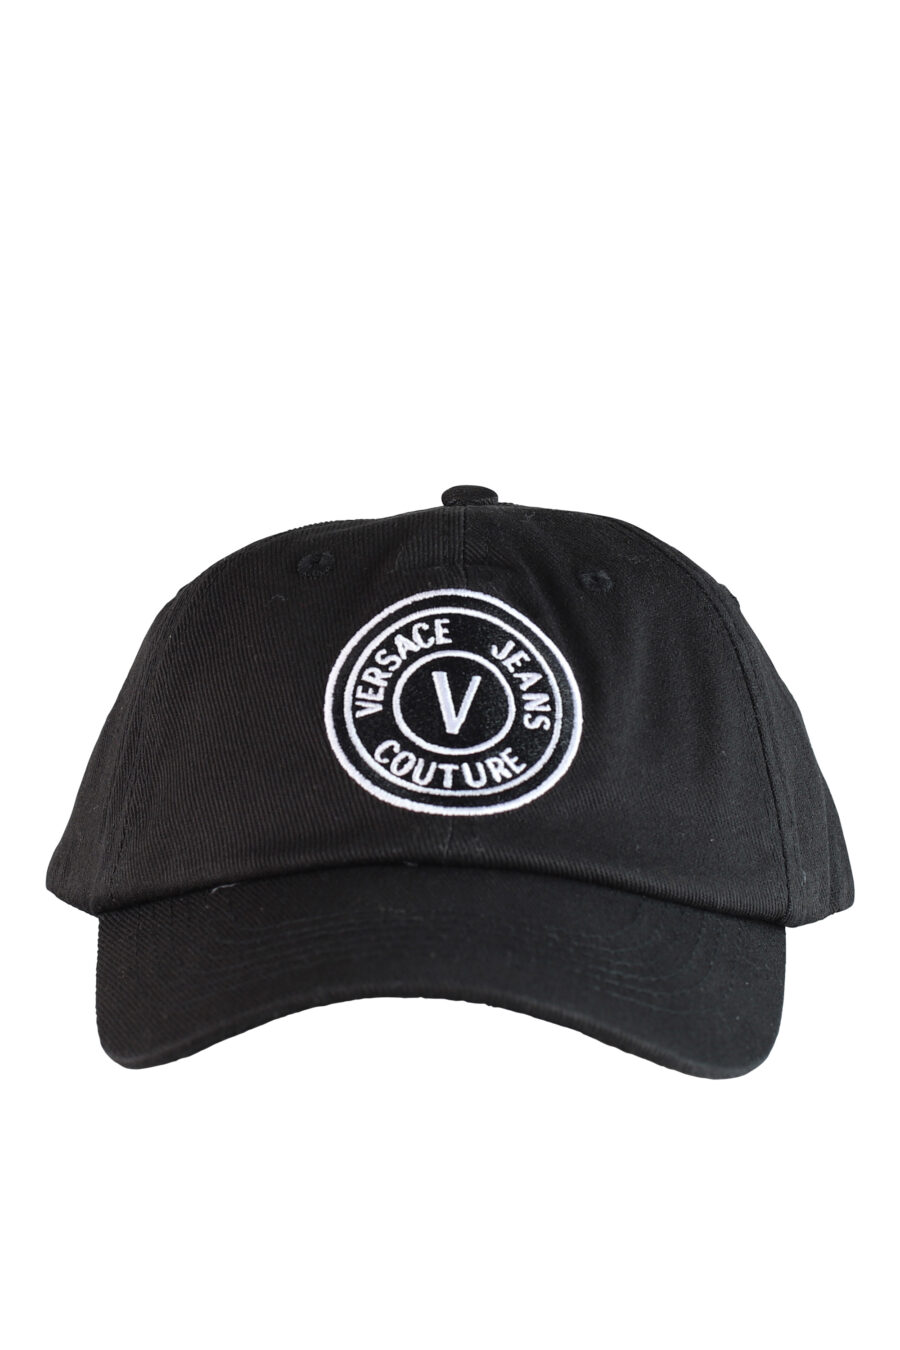 Schwarze Kappe mit weißem kreisförmigen Logo - IMG 0505